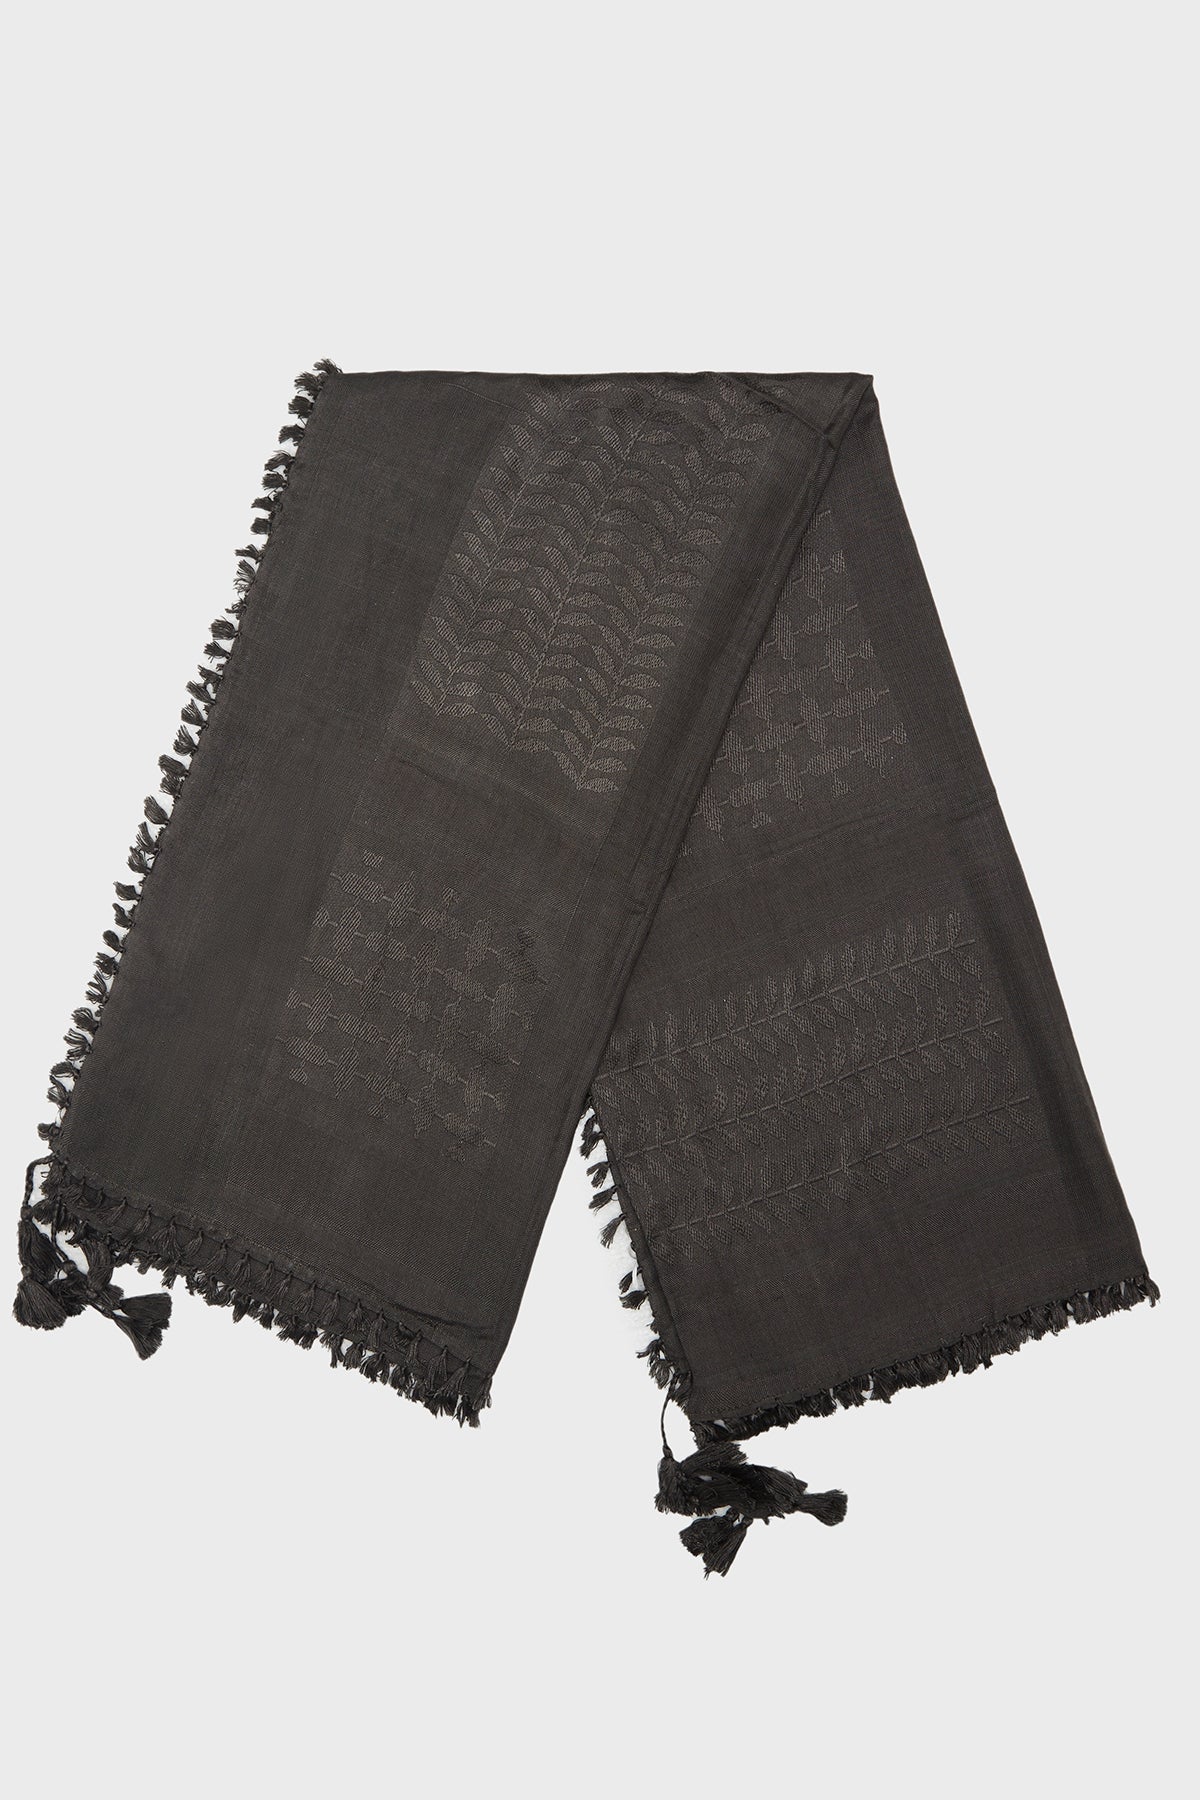 Luxury Bamboo Keffiyeh Scarf - Palestinian Pattern, Fringe Finishing - Man Occasional/Casual Wear - 120 cm x 120 cm - Charcoal/Grey - Cave